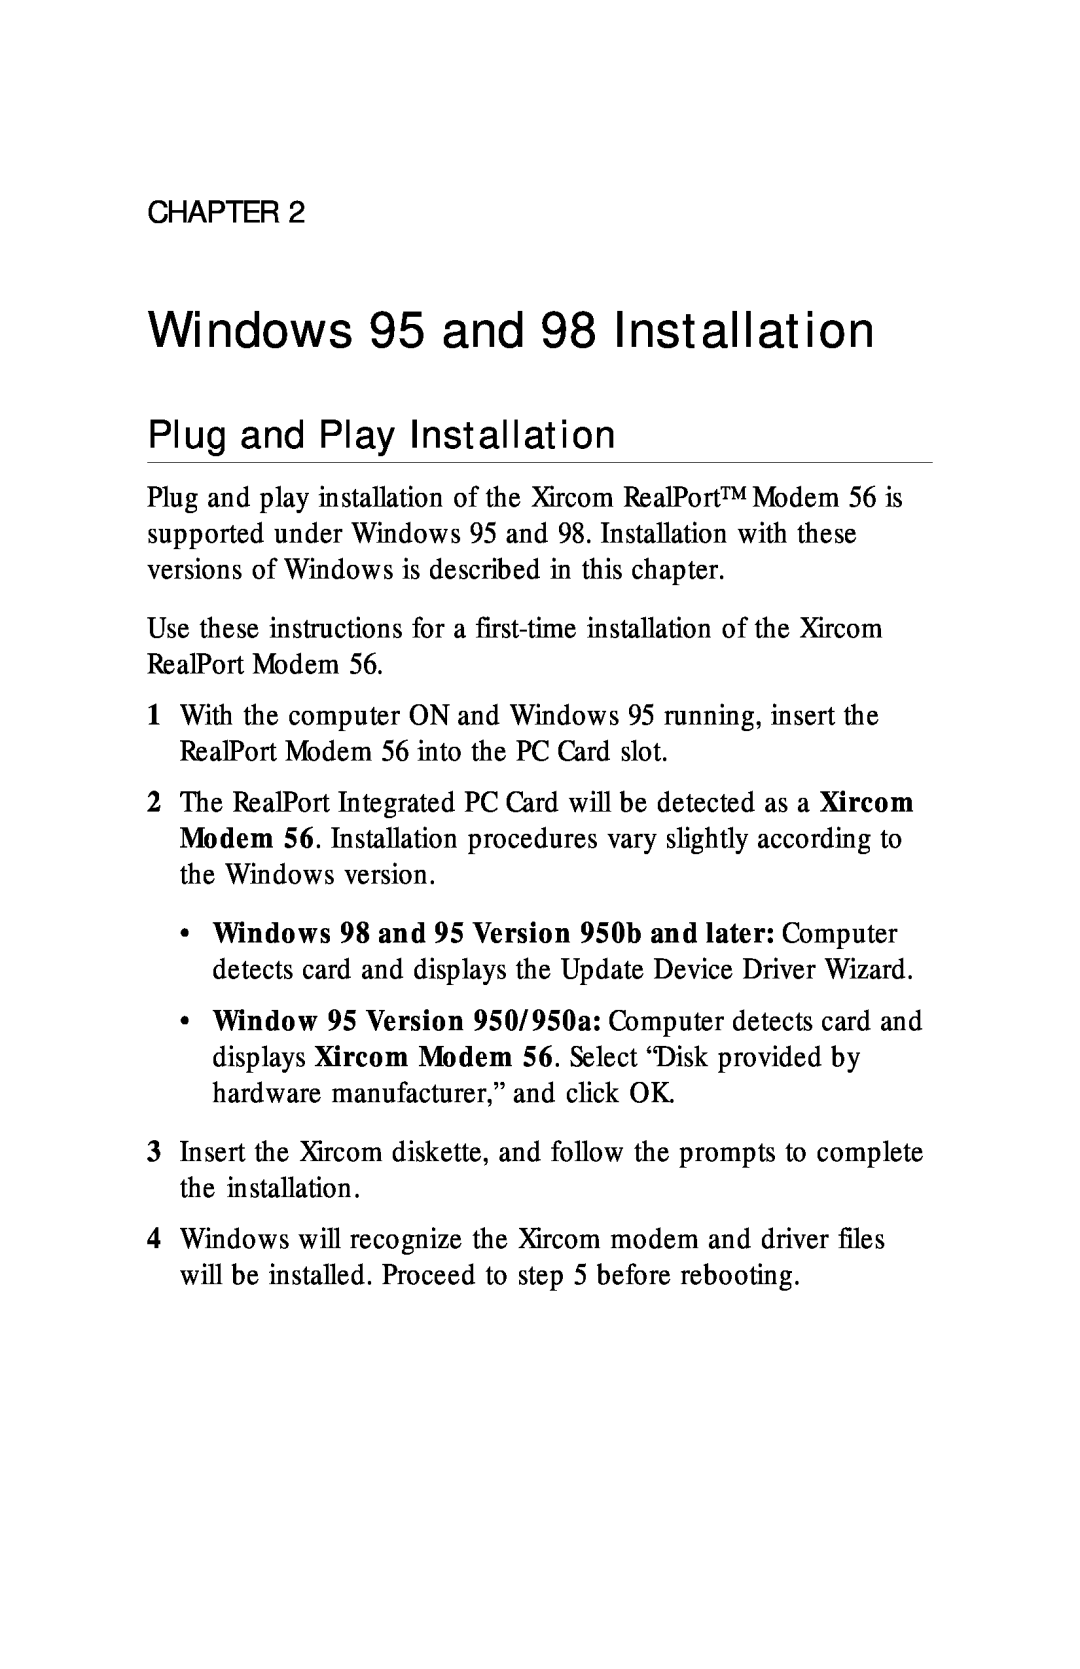 Xircom RM56V1 manual Windows 95 and 98 Installation, Plug and Play Installation 